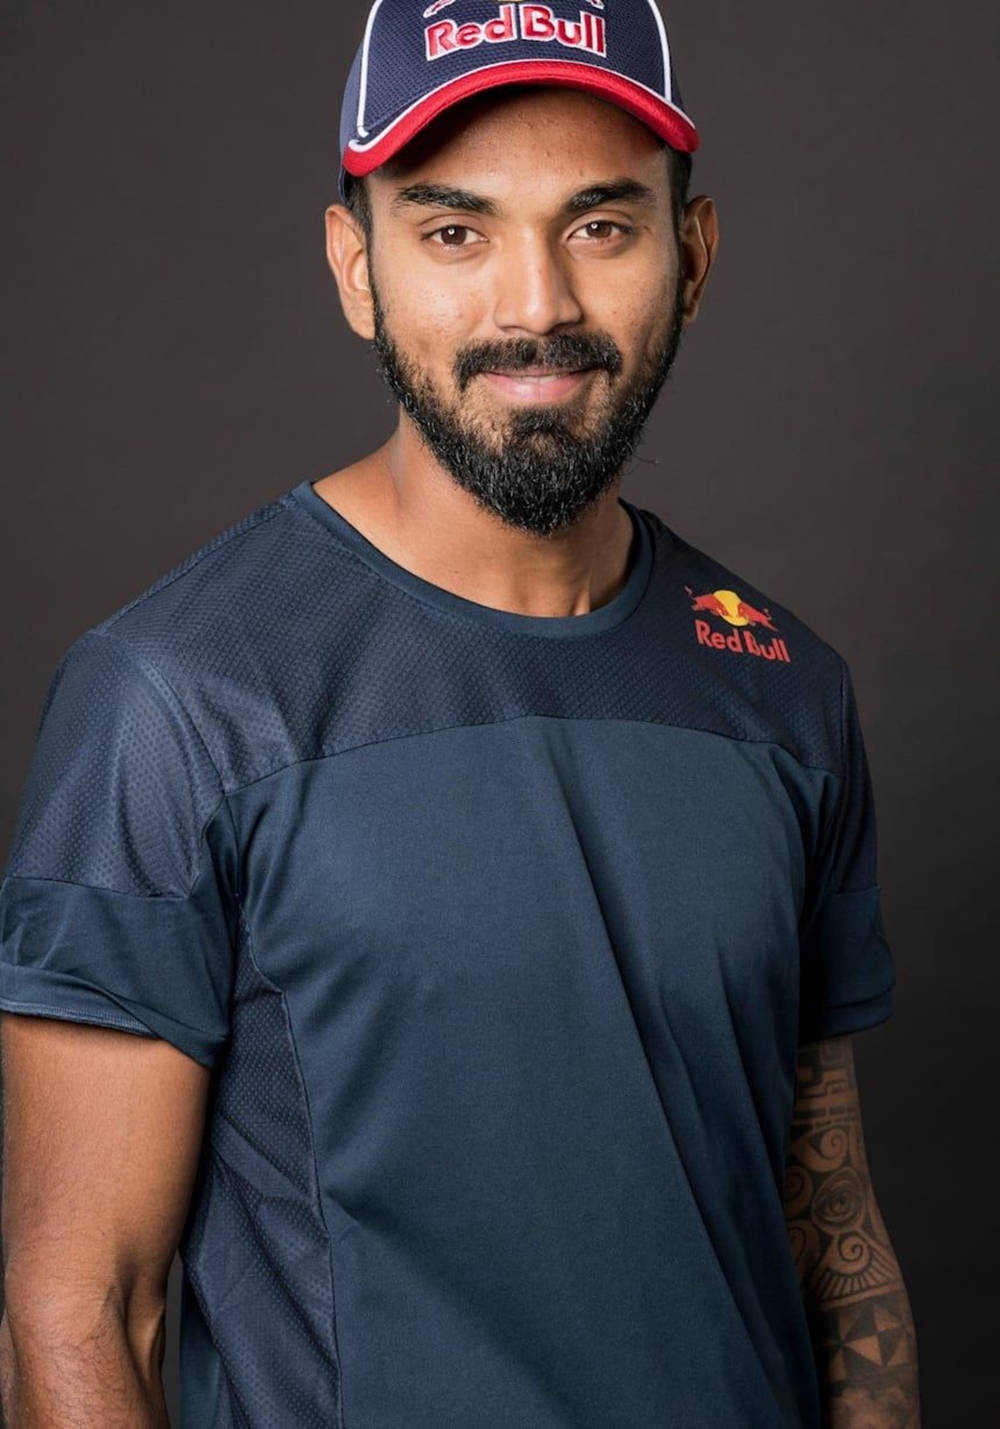 Kl Rahul Smiling For Red Bull Background